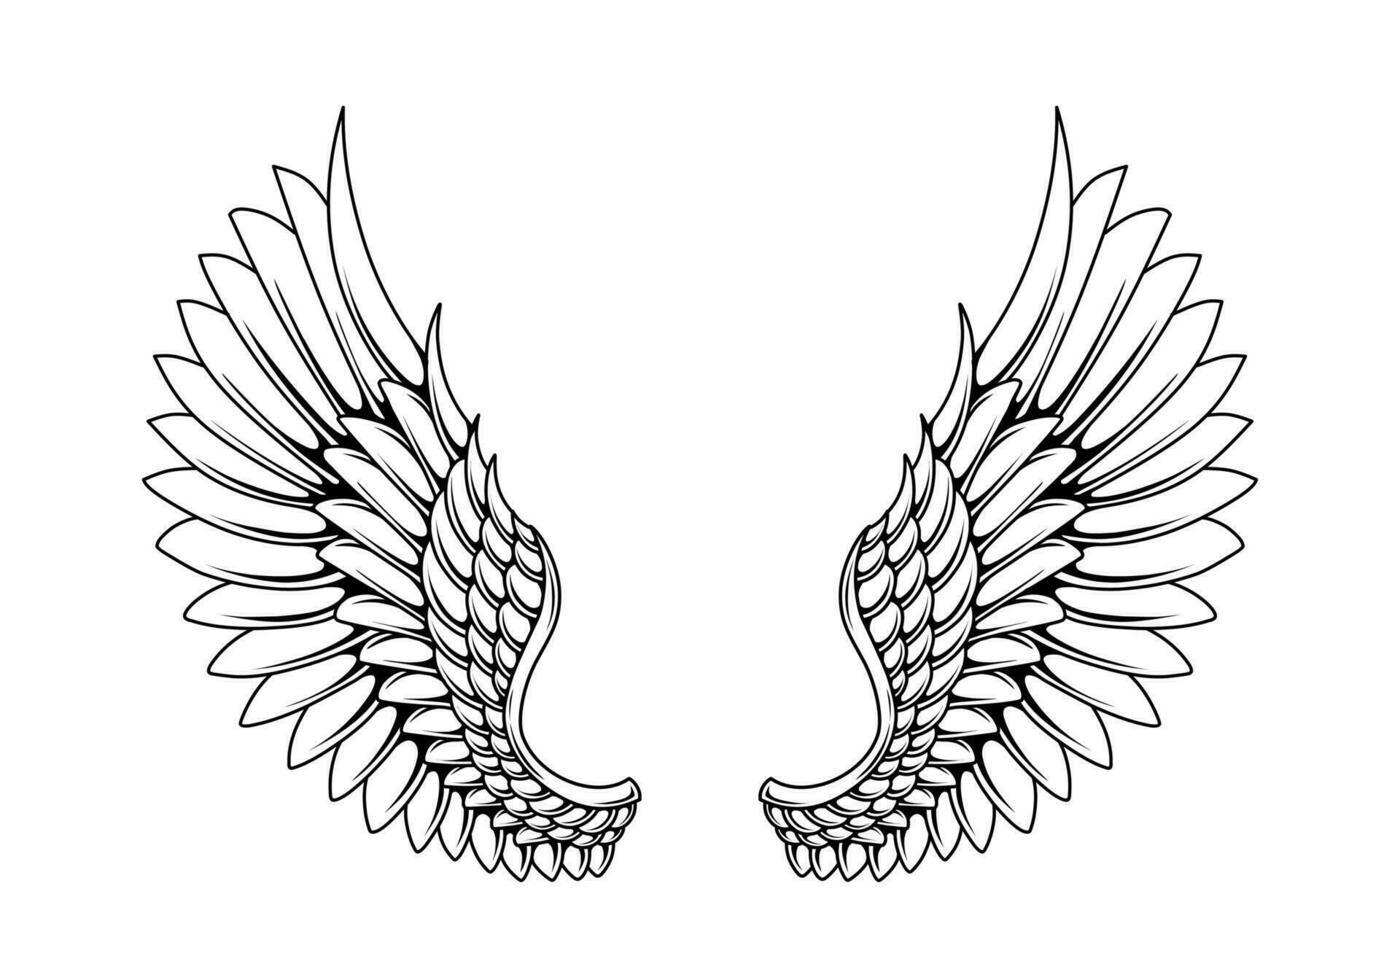 vector tatuagem tribal de asas de anjo